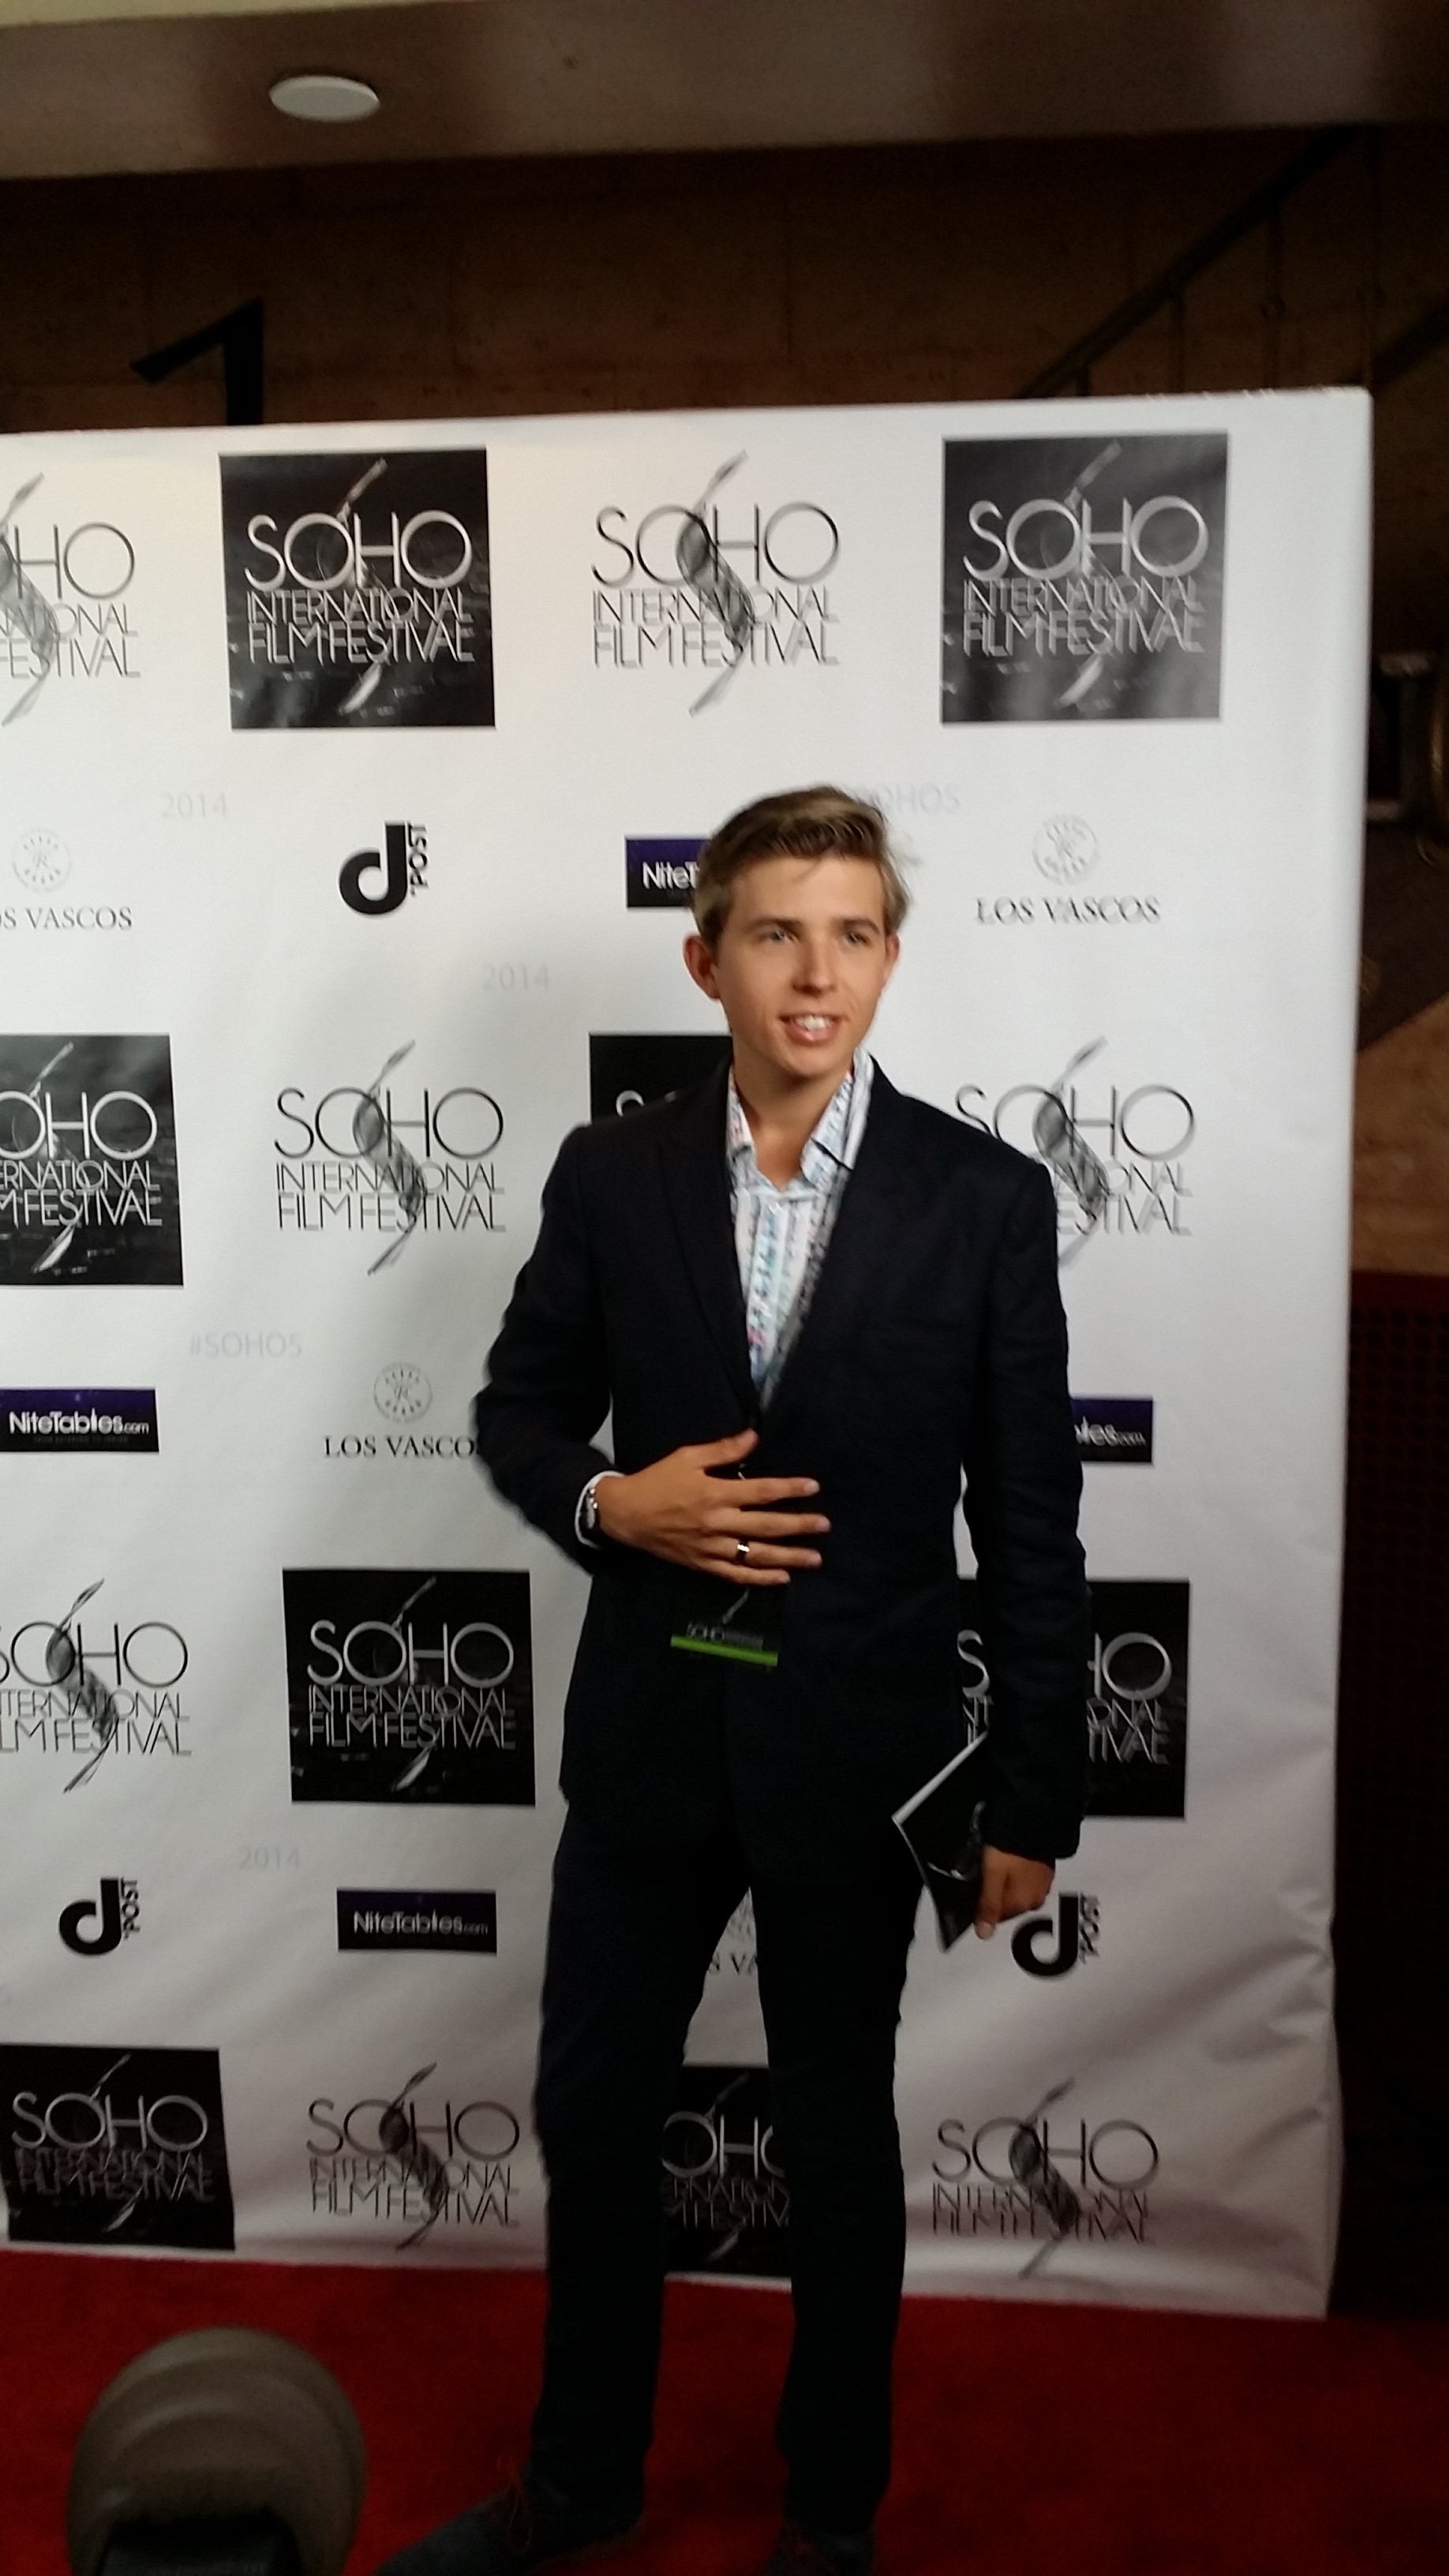 Blake Borcich at SOHO International Film Festival 2014 NYC